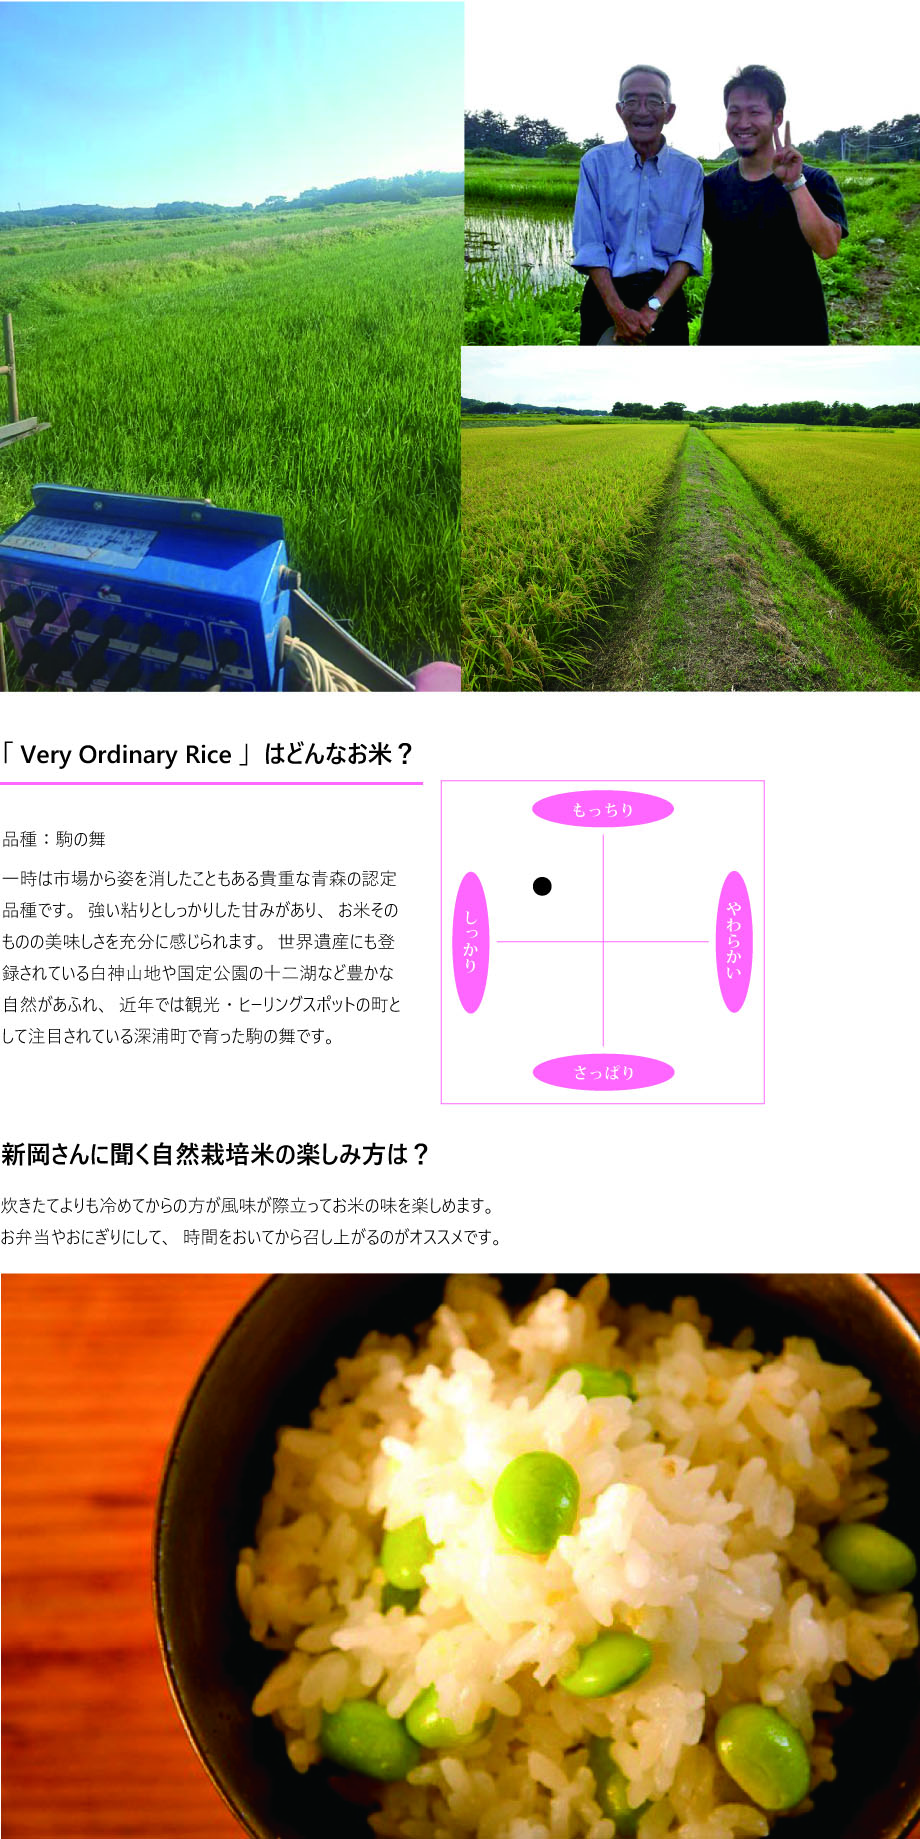 (R04産)Very Ordinary Rice白米5kg